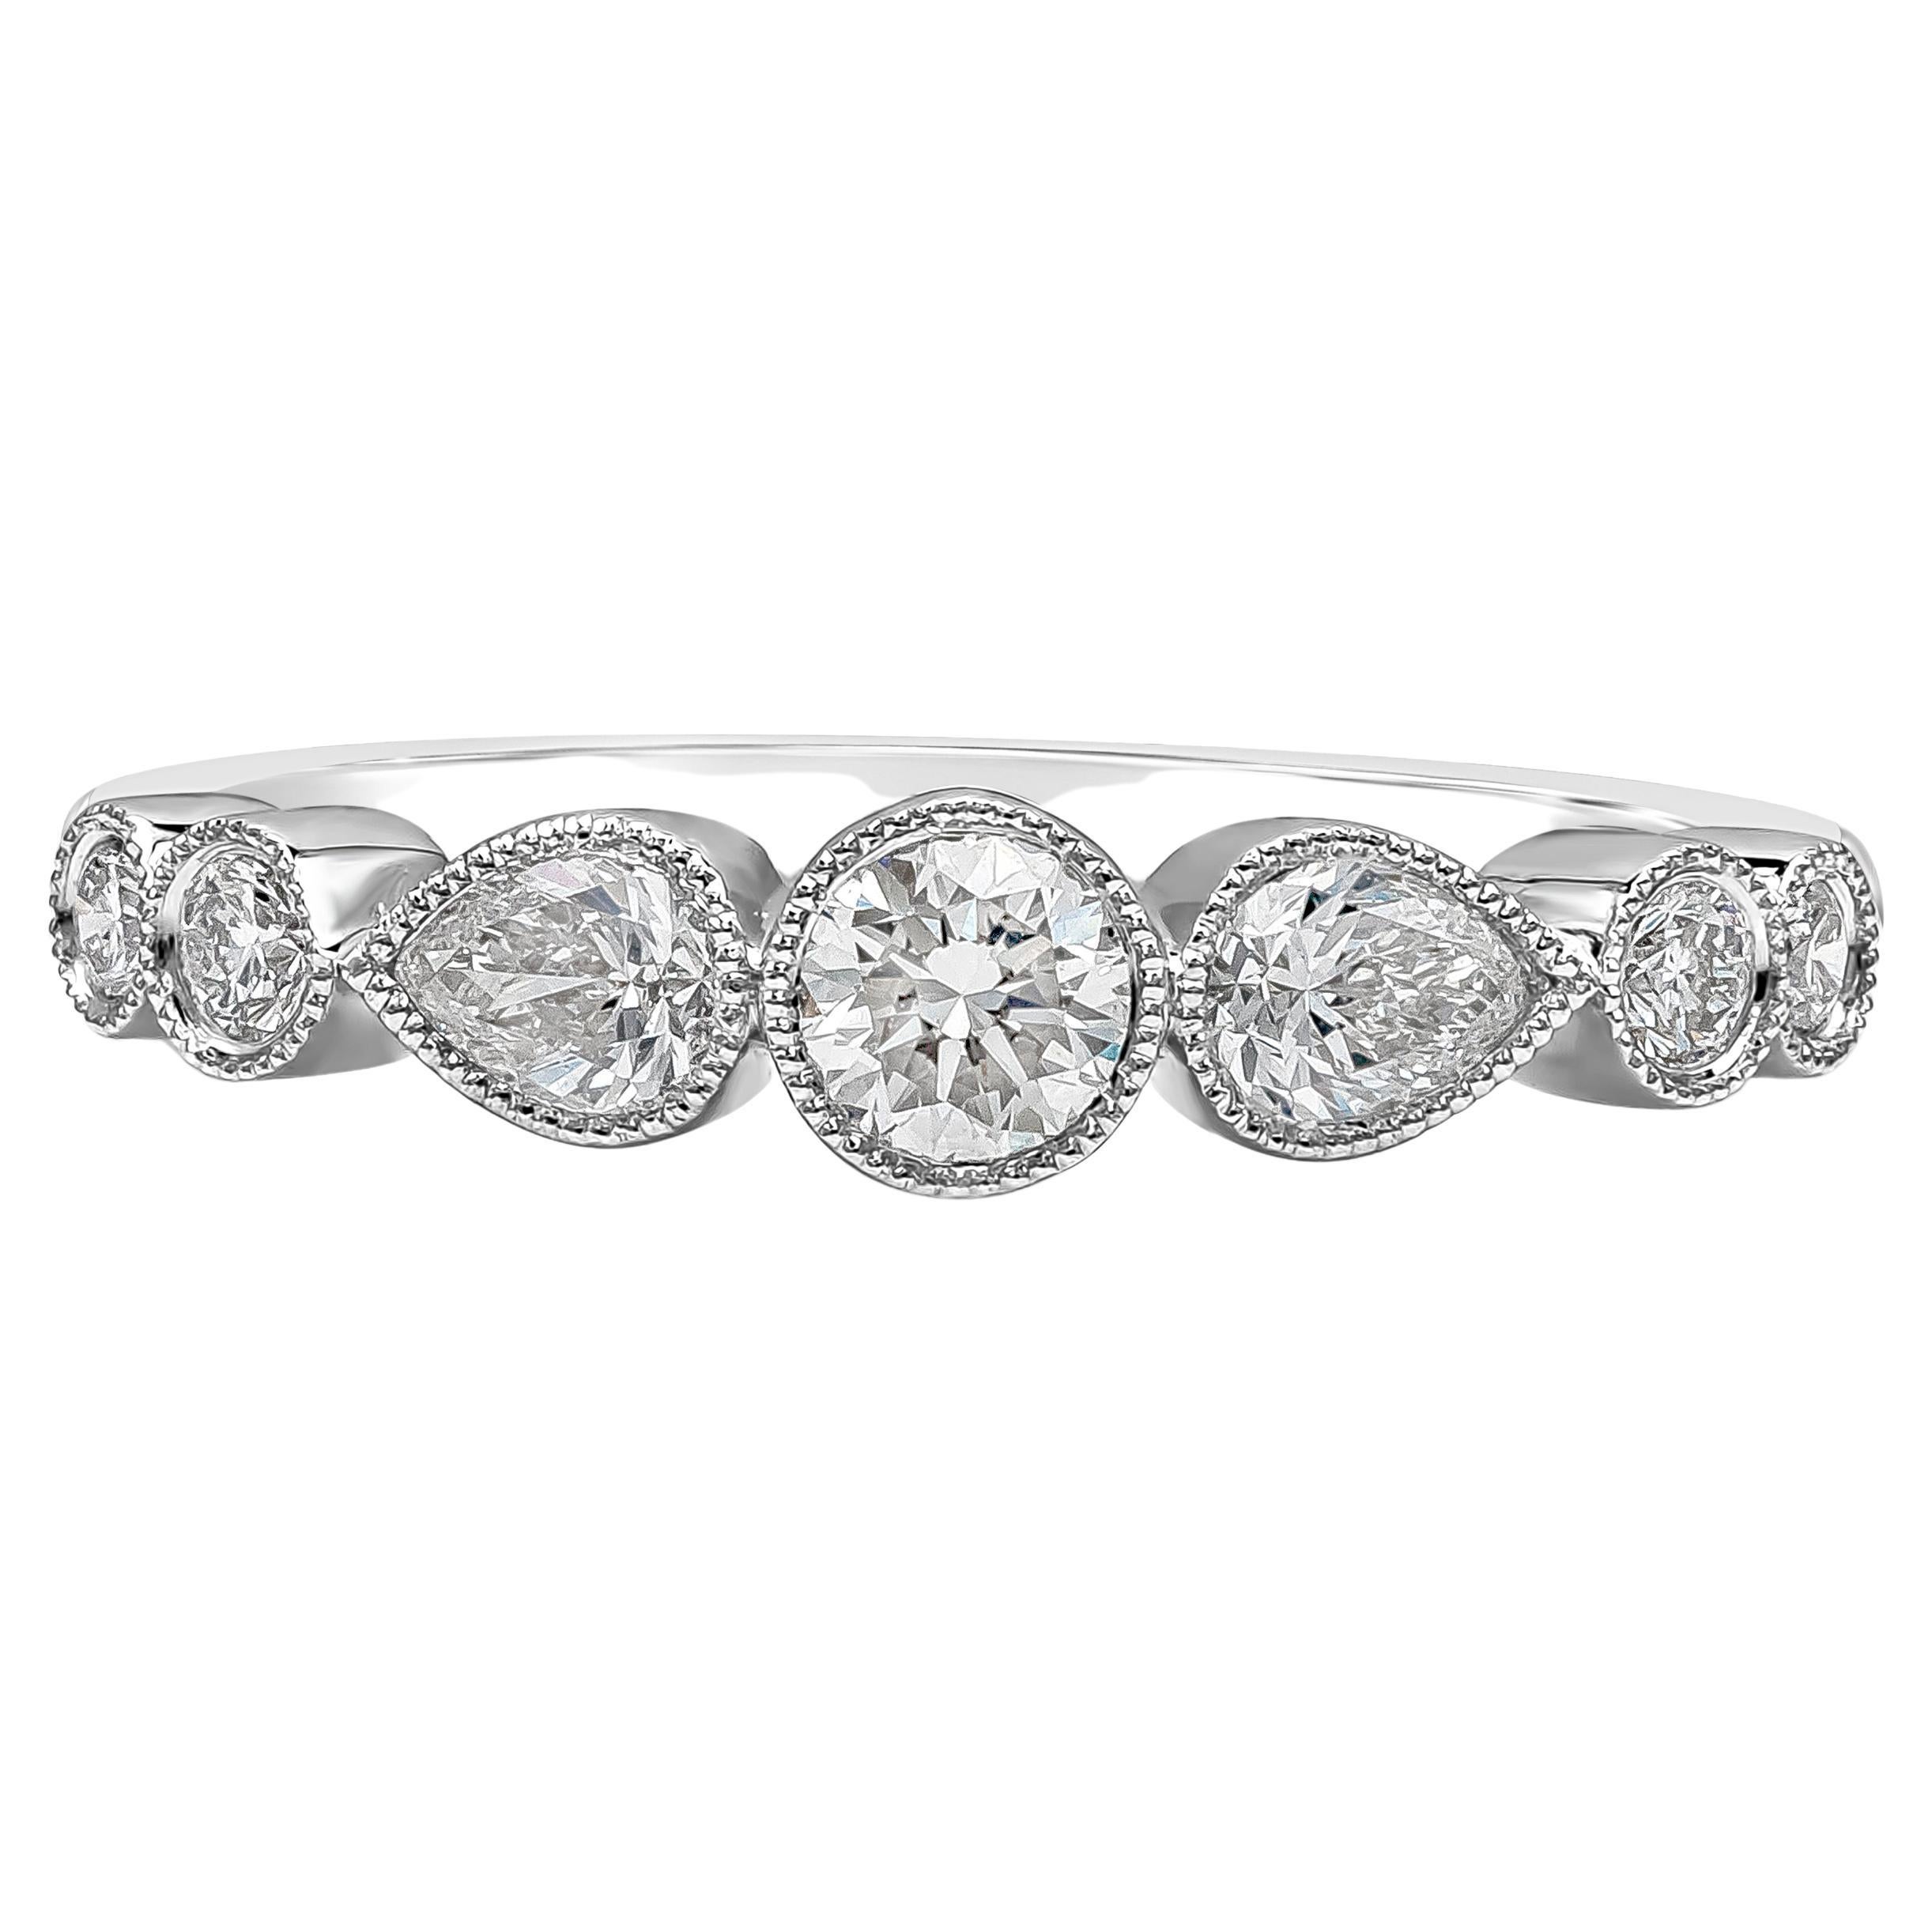 Roman Malakov, Antique Style 0.62 Carat Diamond Fashion Ring